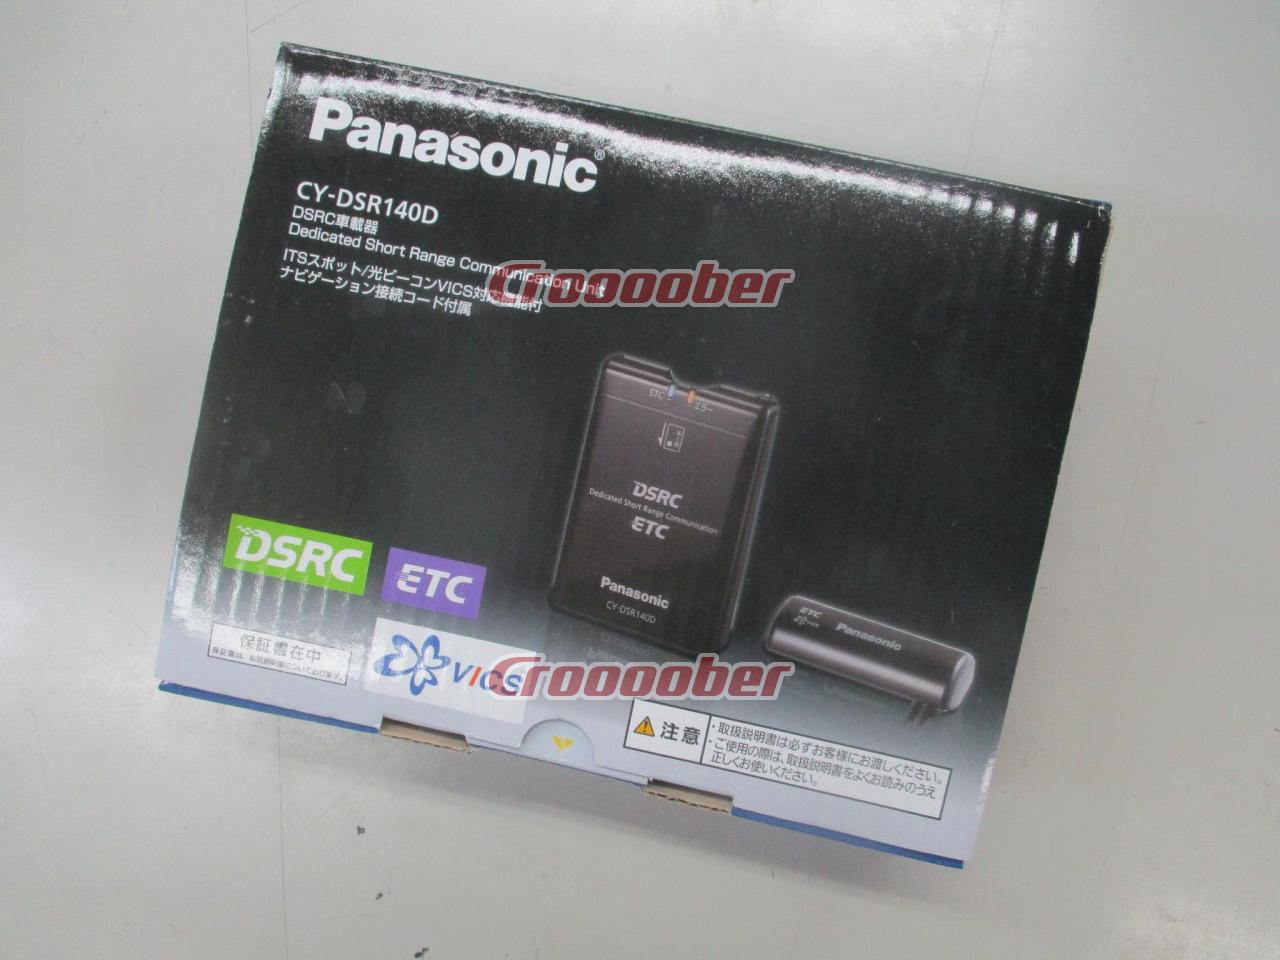 Panasonic CY-DSR140D | ETC Separate | Croooober